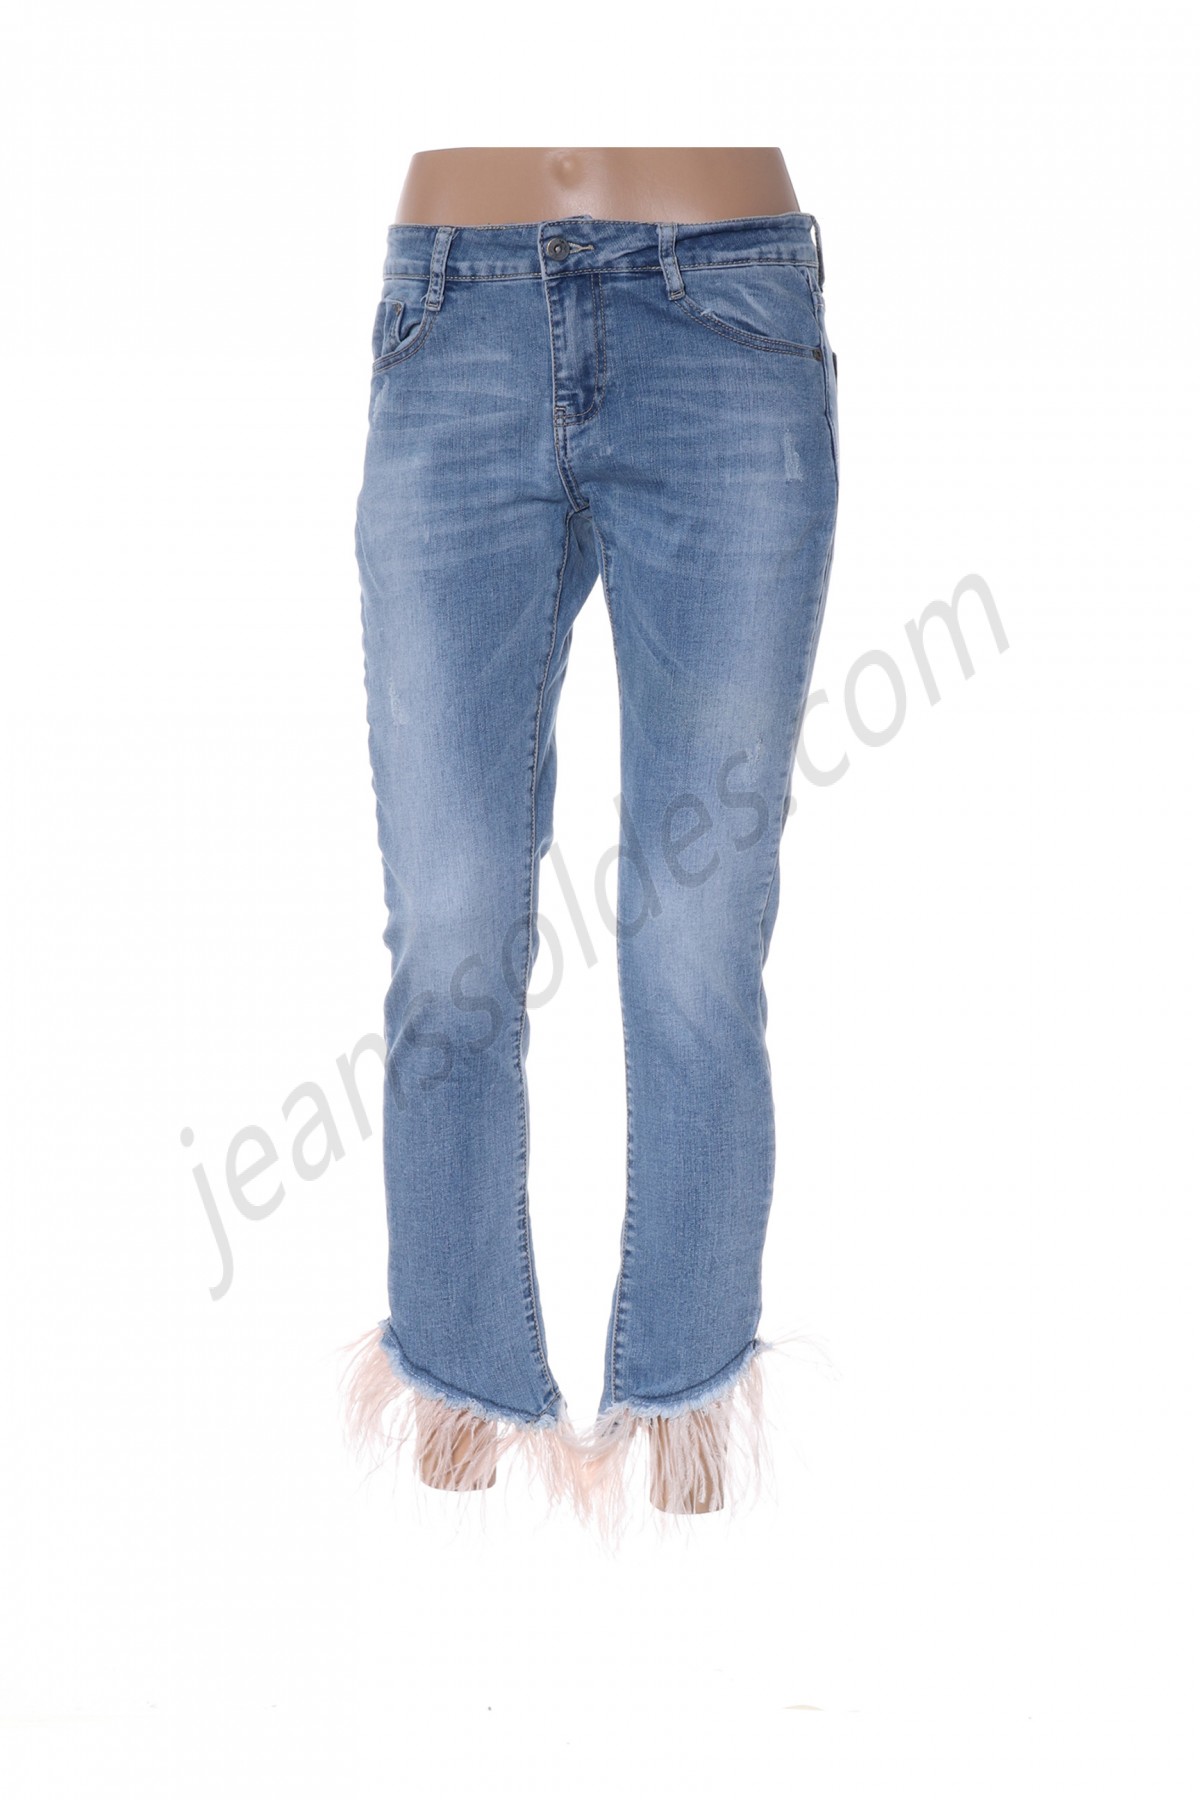 mi.co.k-Jeans coupe slim prix d’amis - -0